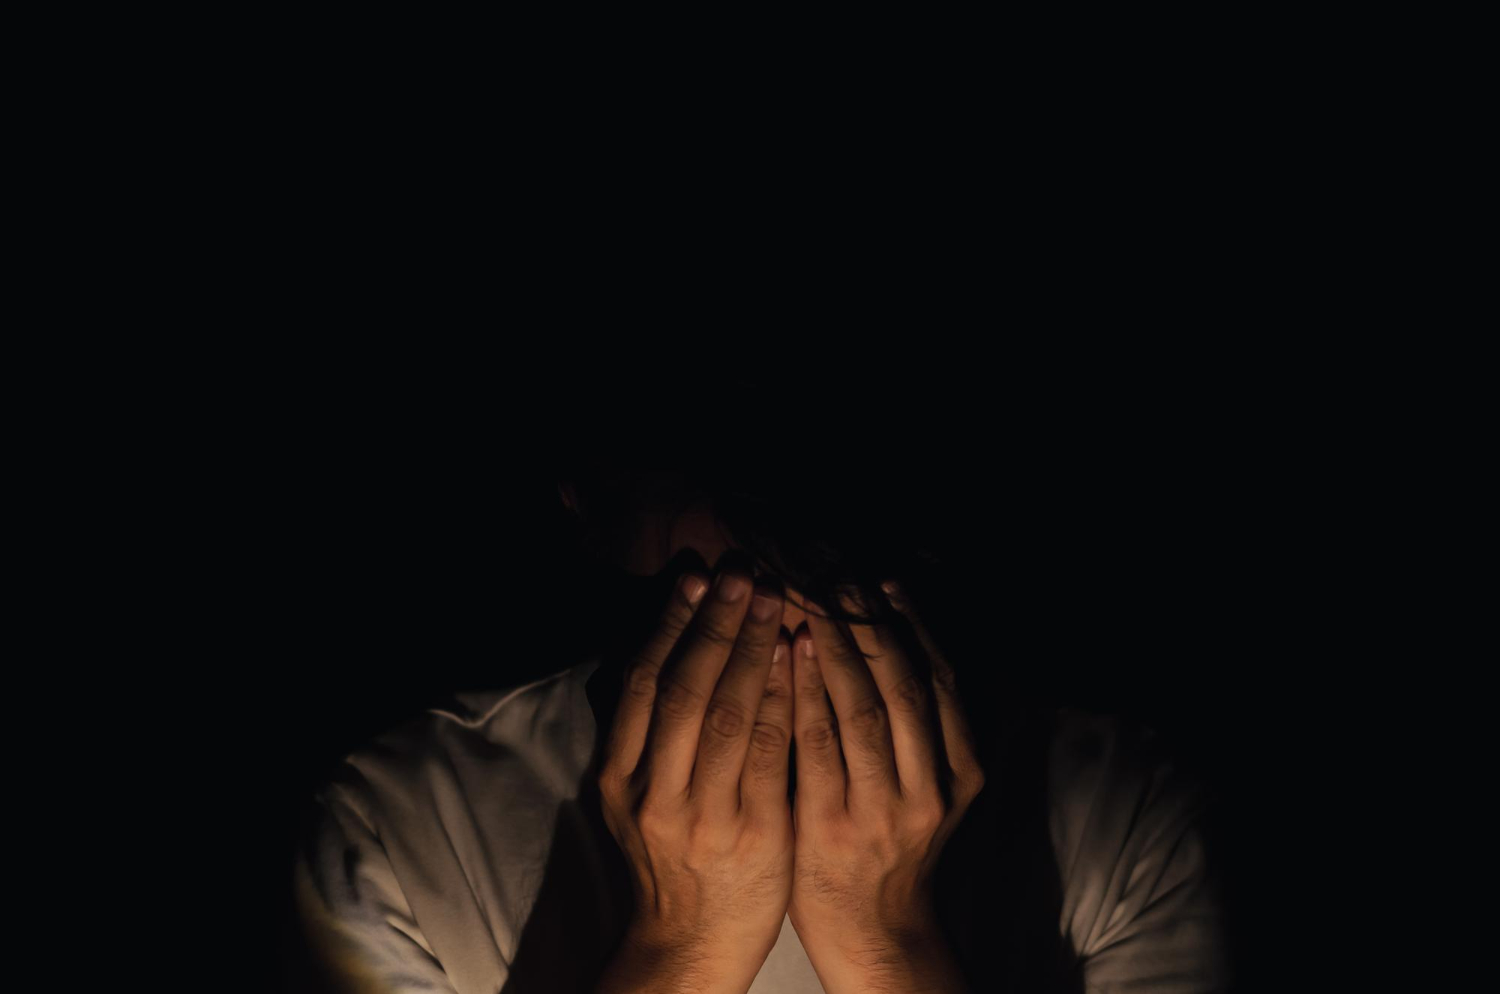 miserable depressed man sitting alone dark background depression mental health concept